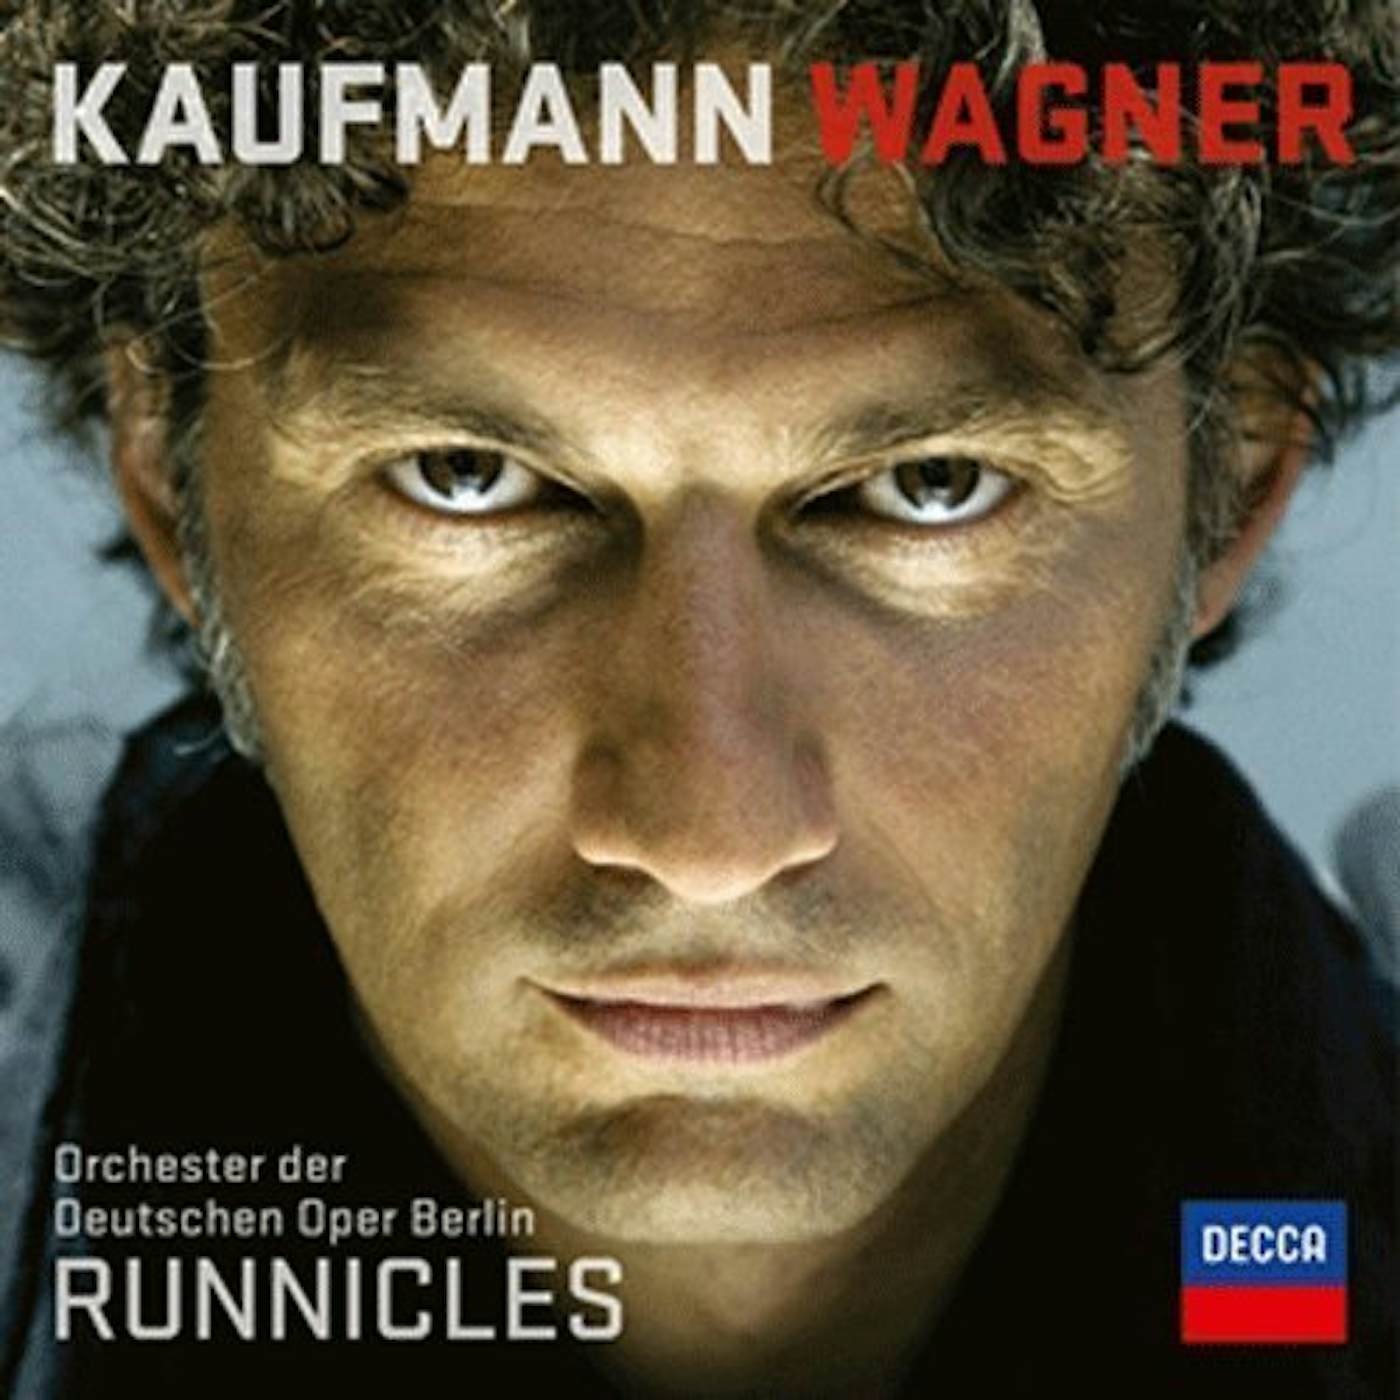 Jonas Kaufmann WAGNER CD